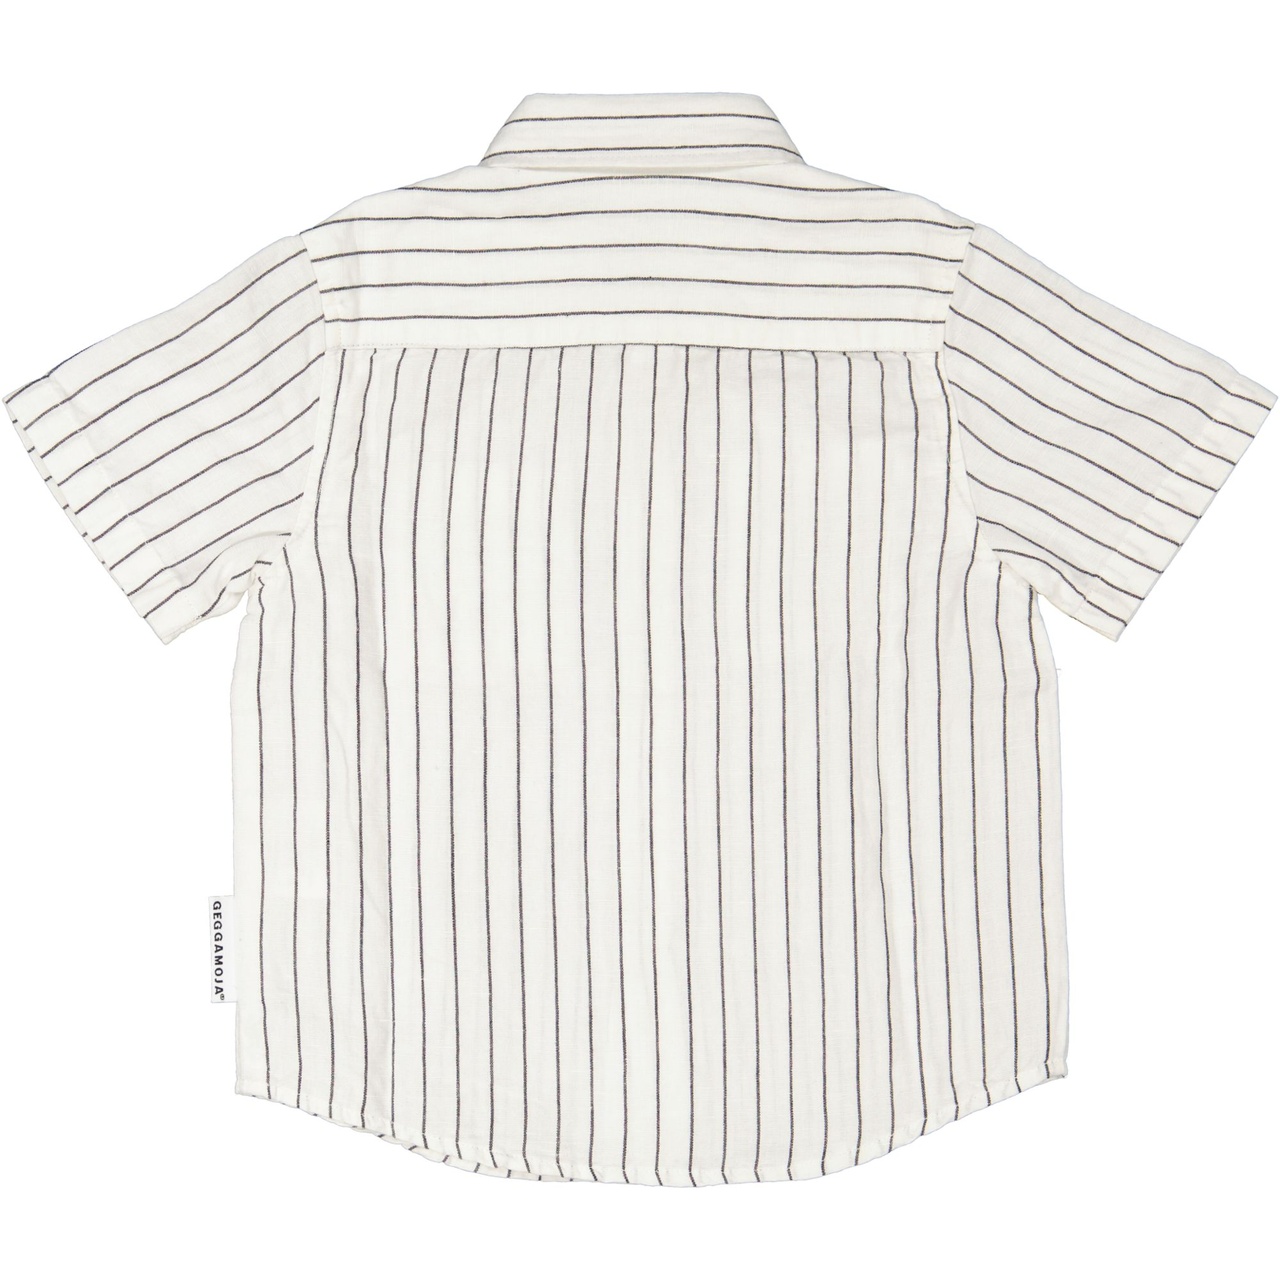 Linnen shirt Navy stripe 86/92